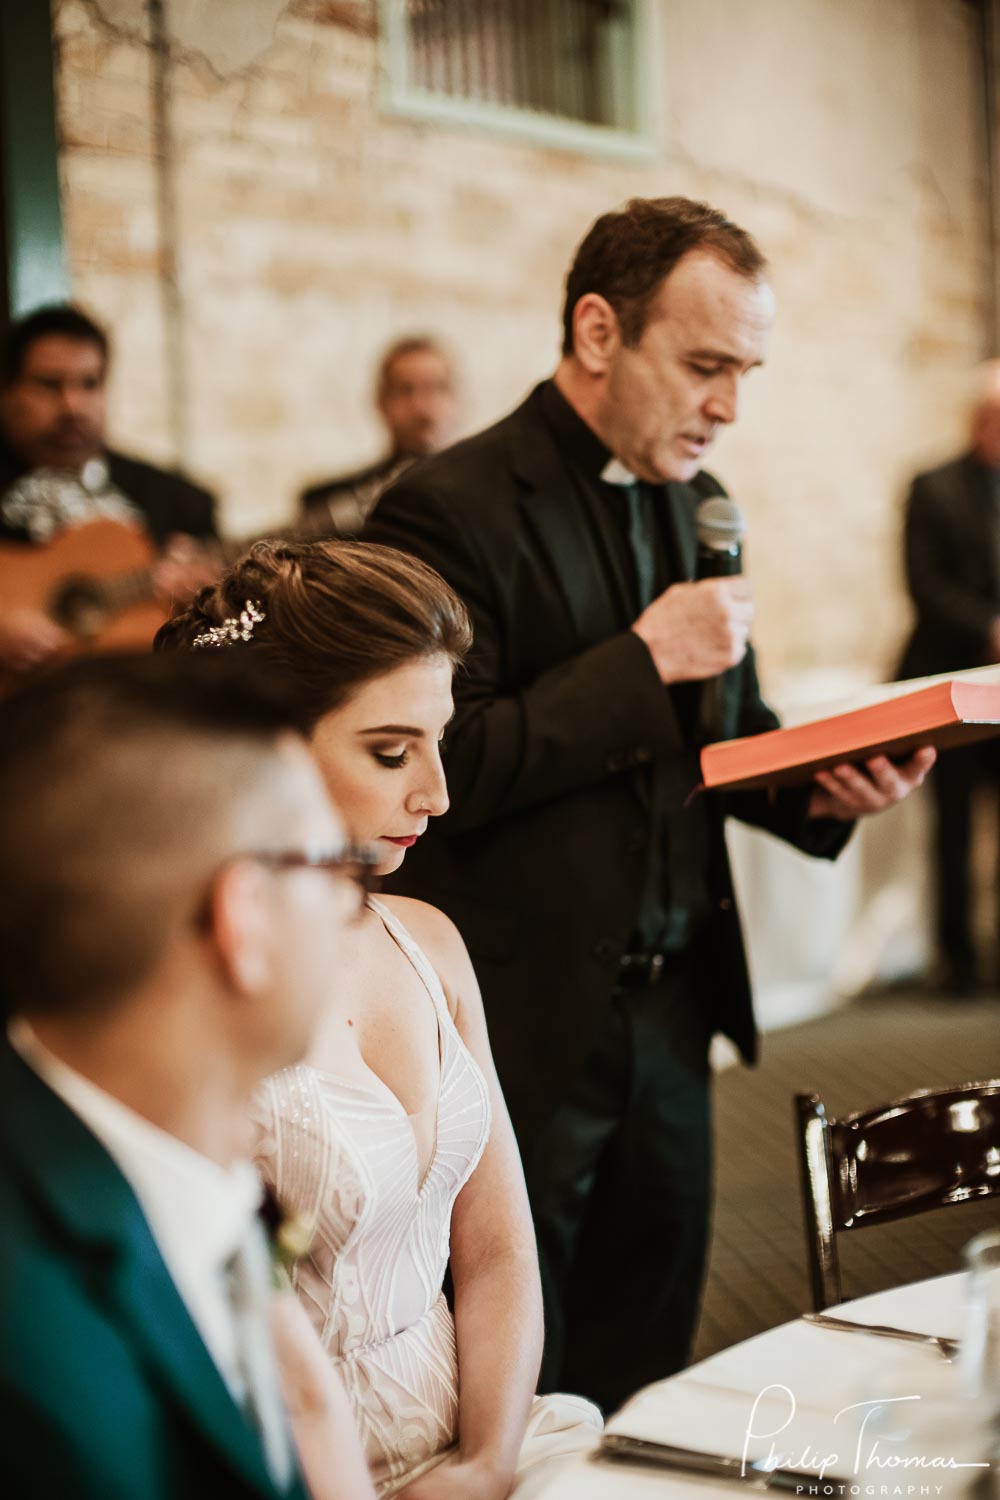 36 Philip Thomas Photography-Sunset Station Wedding San Antonio documentary weddings